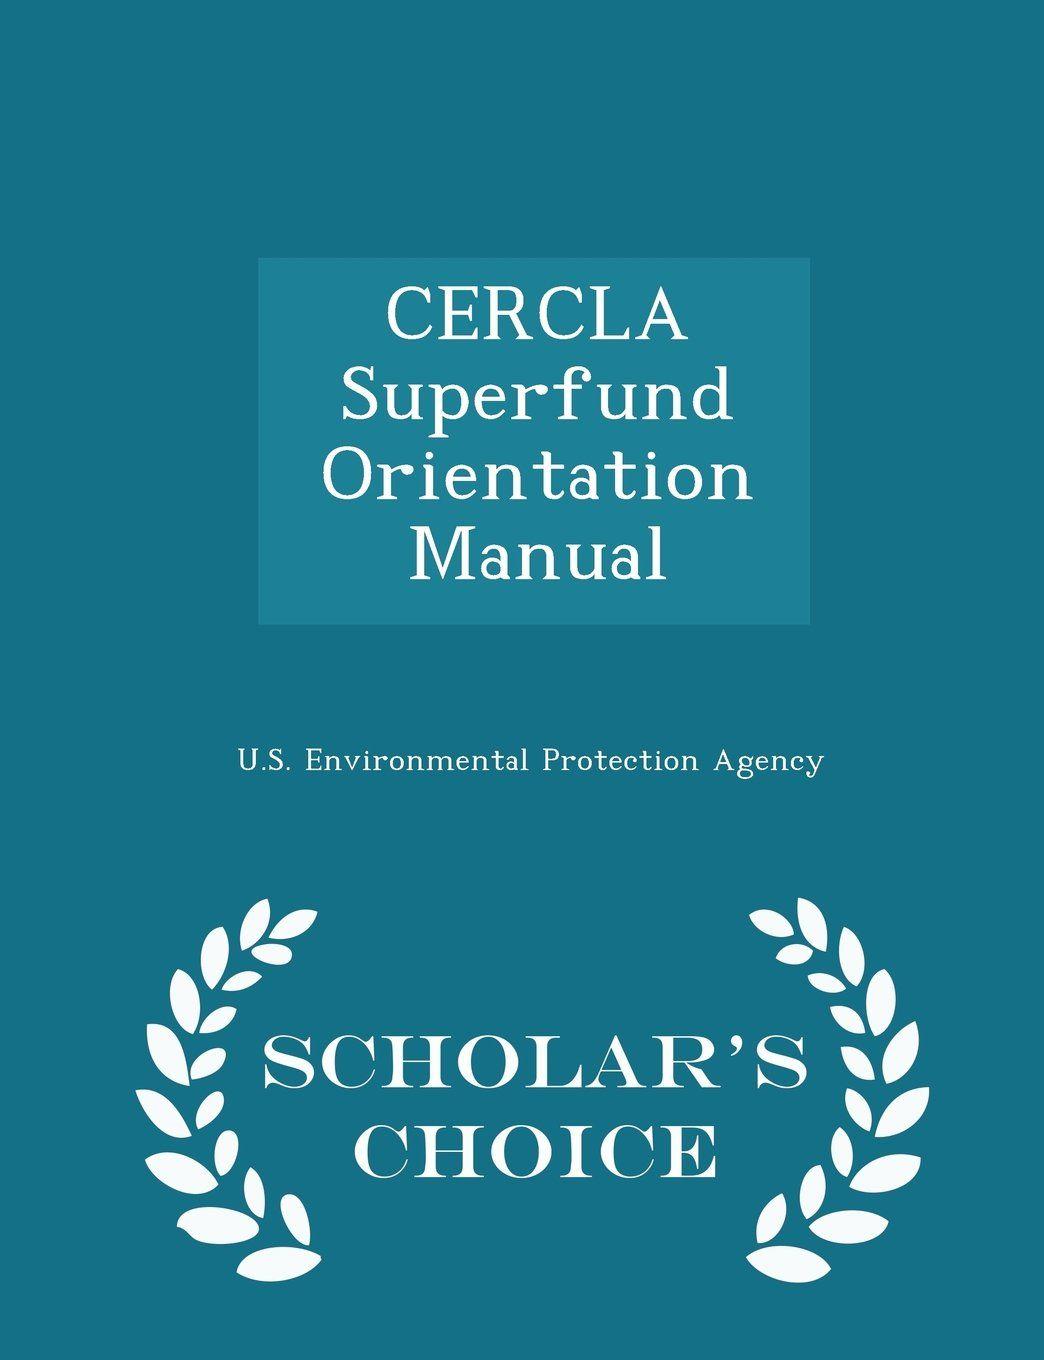 CERCLA Logo - CERCLA Superfund Orientation Manual - Scholar's Choice Edition: U.S. ...